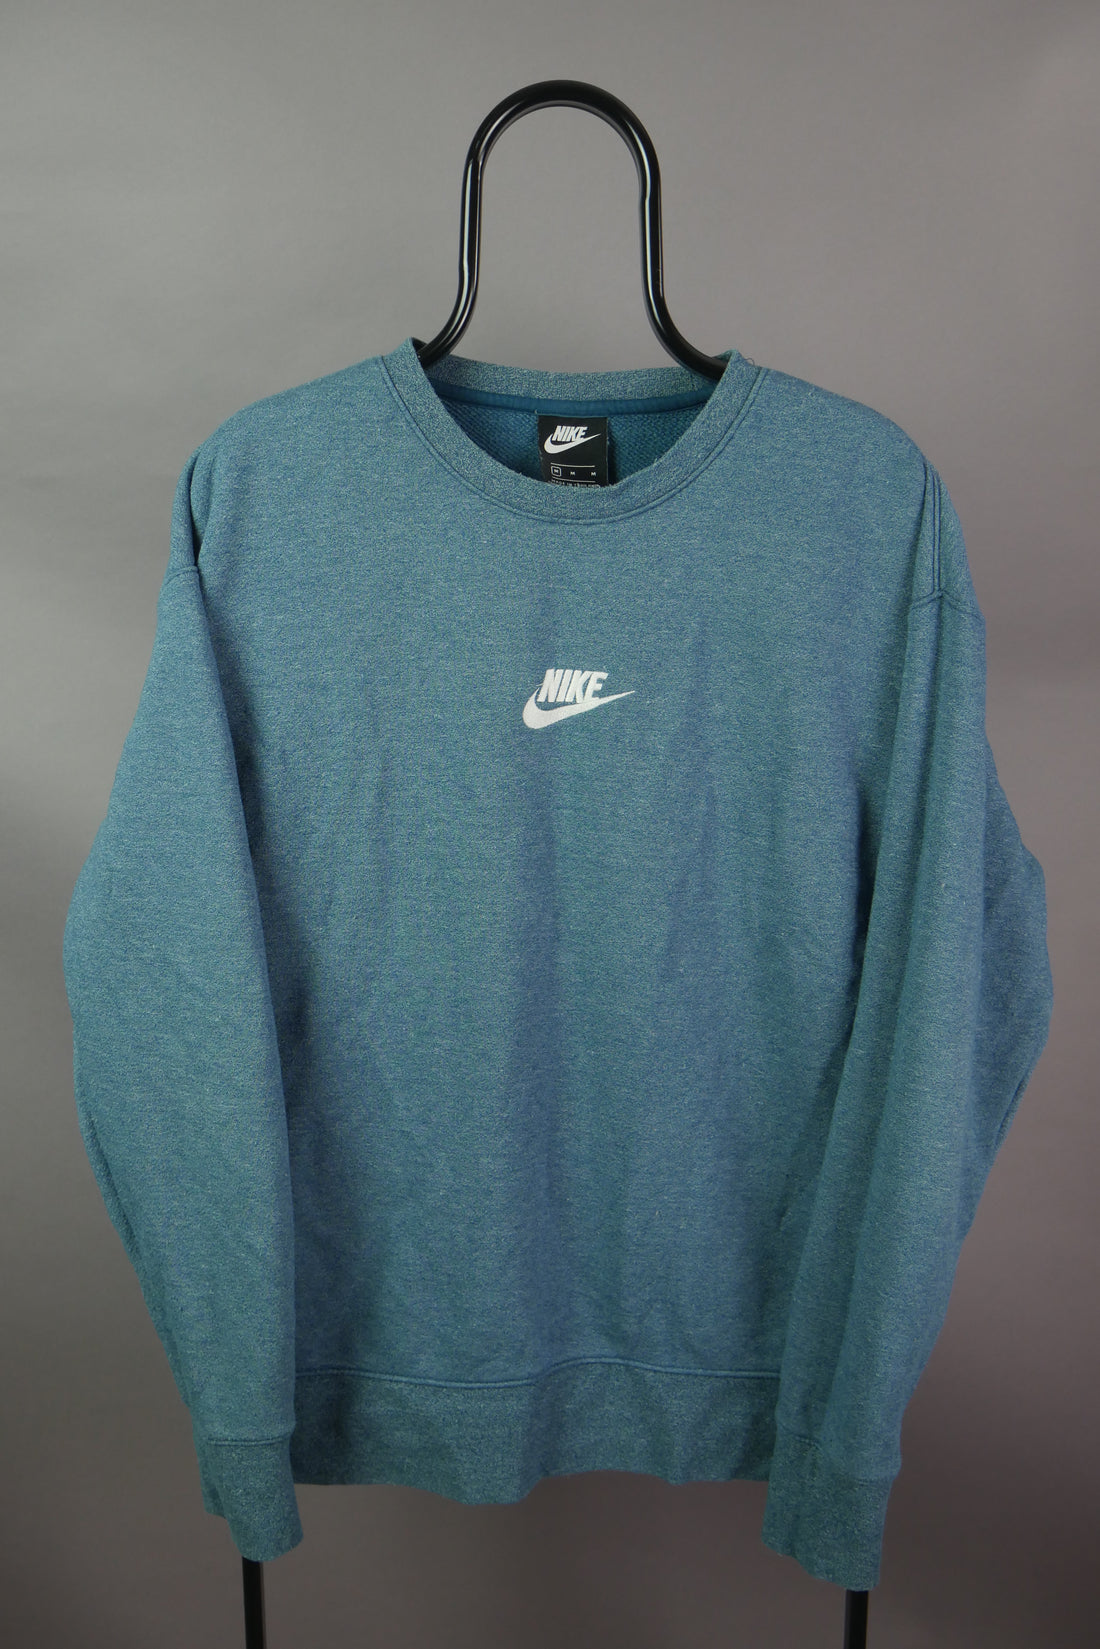 The Nike Embroidered Logo Sweatshirt (M)